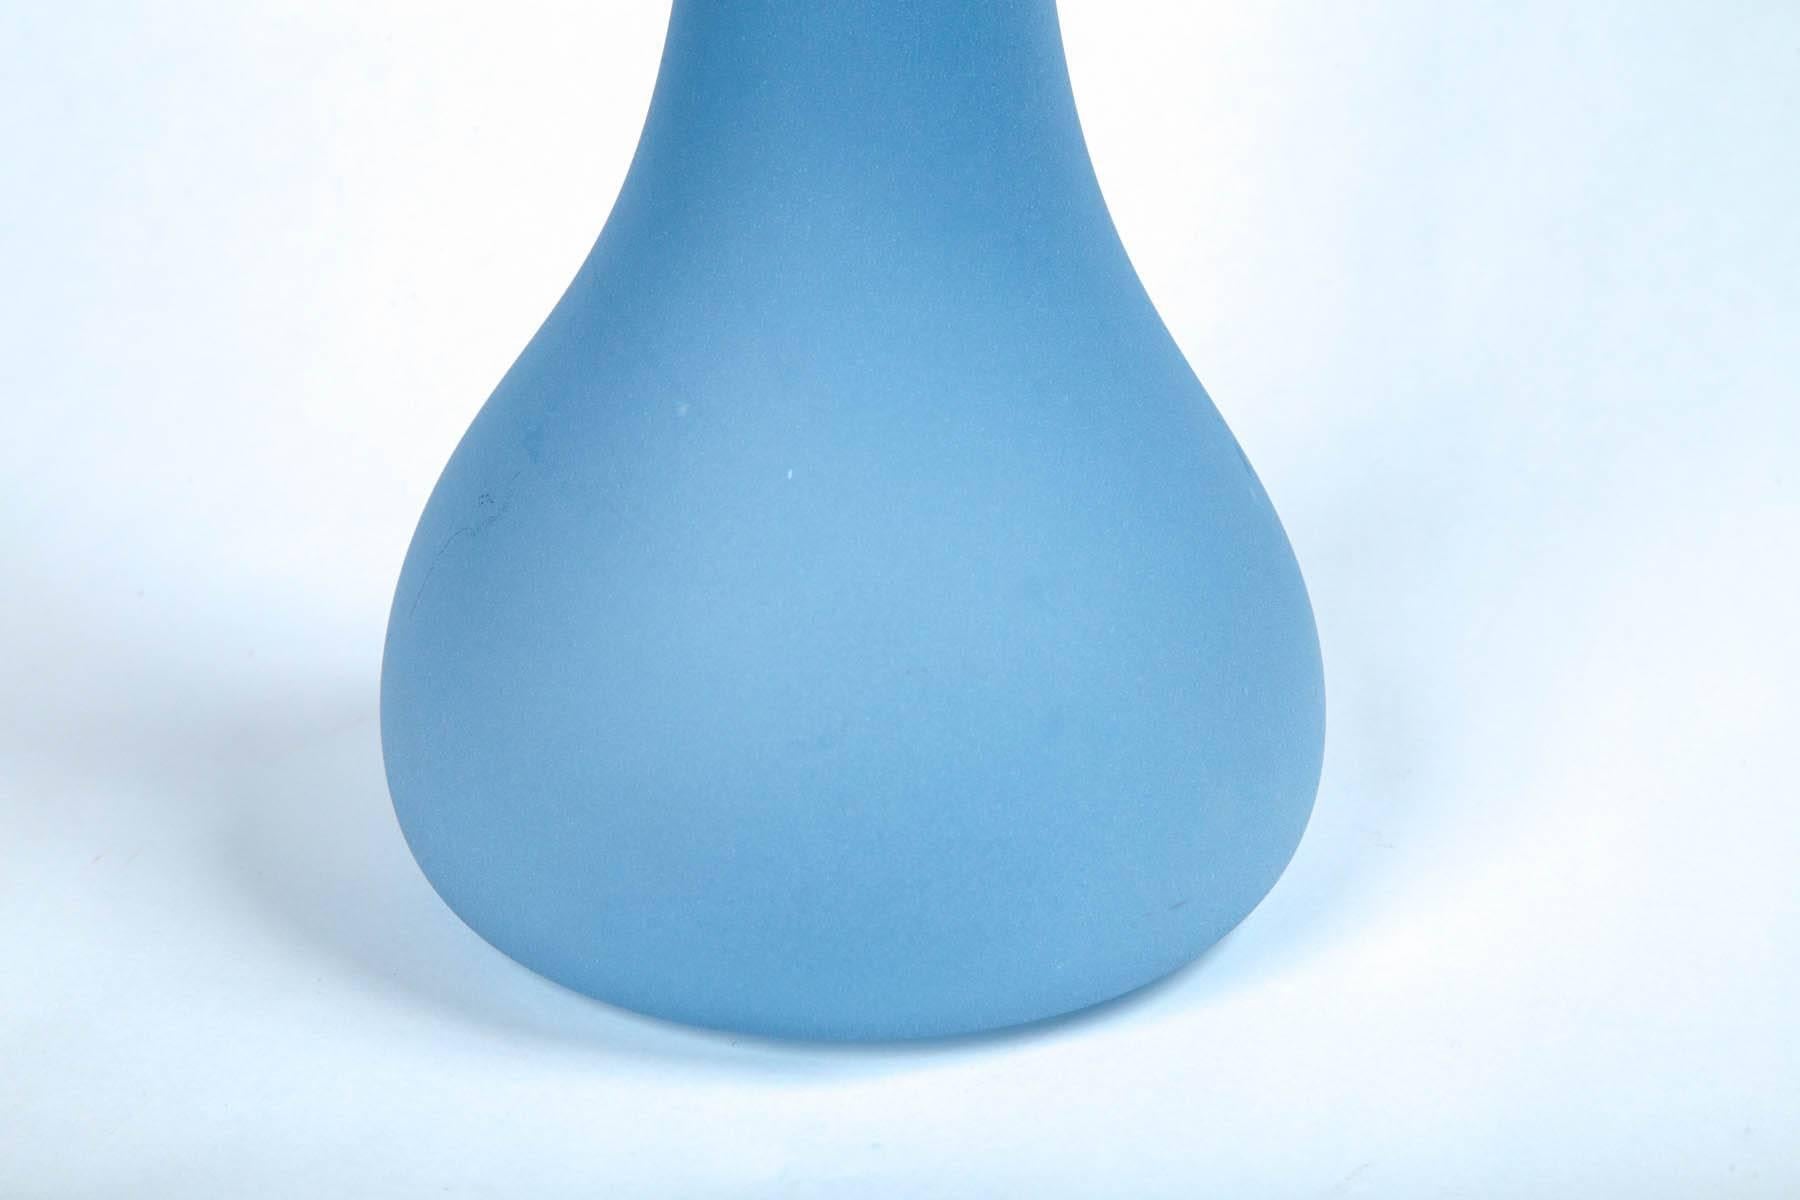 Handblown art glass vase, 20th century. Beautiful matte blue glass. Sculptural shape. Etched signature on bottom.